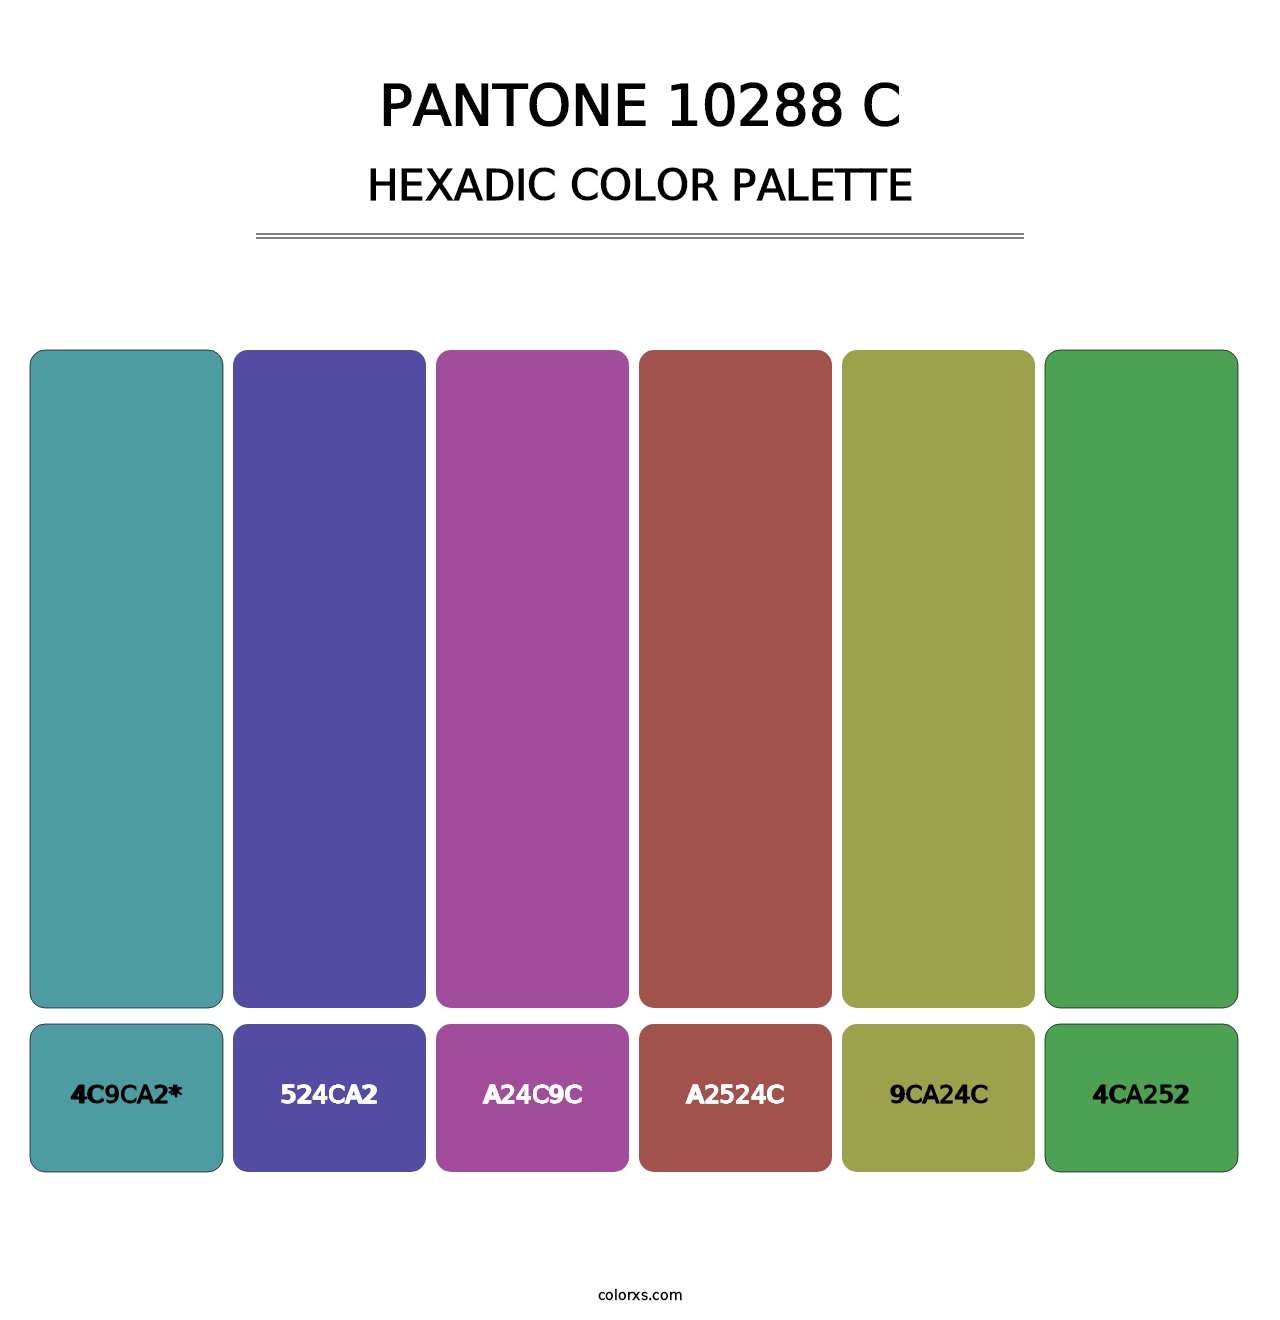 PANTONE 10288 C - Hexadic Color Palette